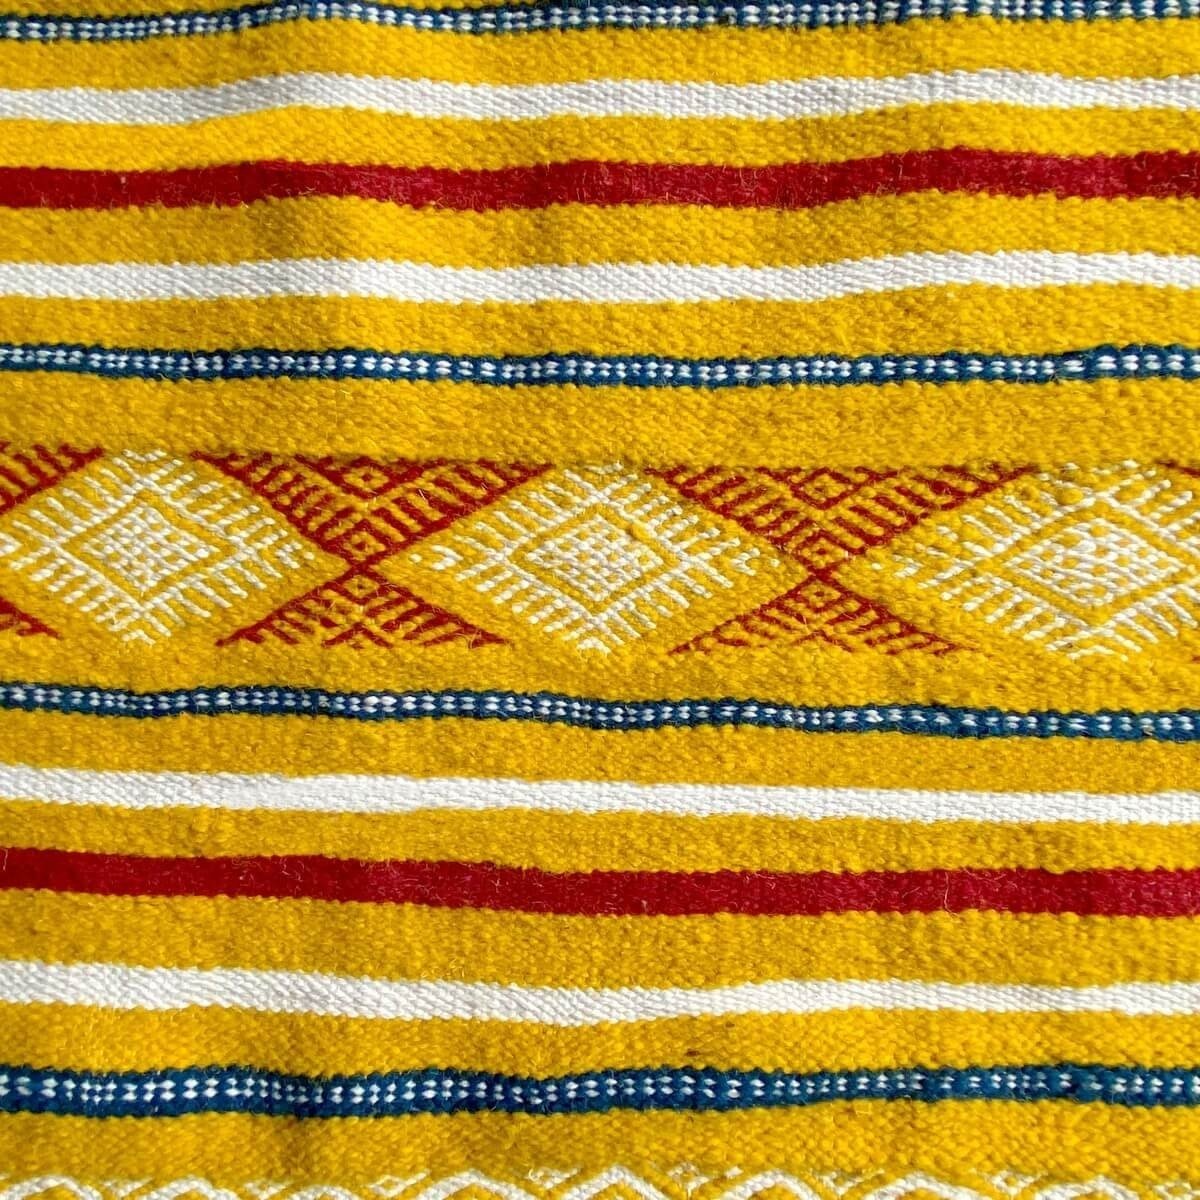 Tapete berbere Tapete Kilim Sahraoui 144x258 Branco/Amarelado (Tecidos à mão, Lã) Tapete tunisiano kilim, estilo marroquino. Tap